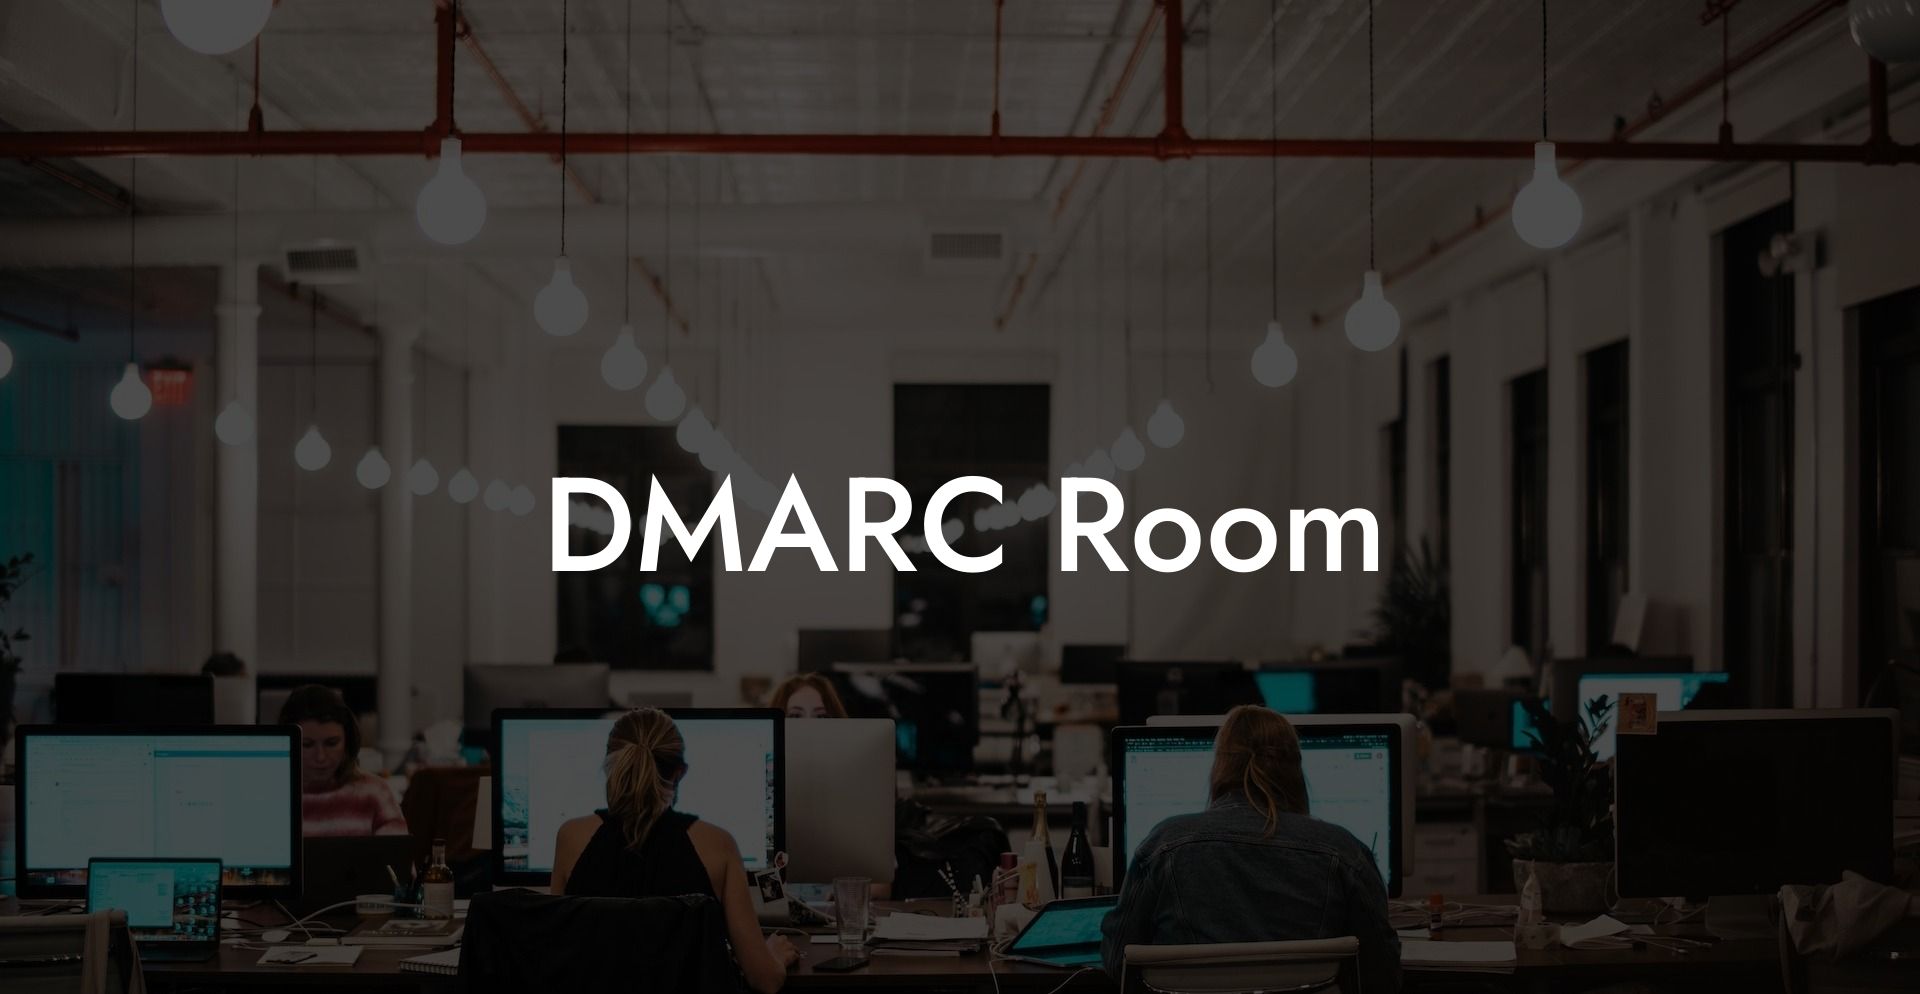 DMARC Room